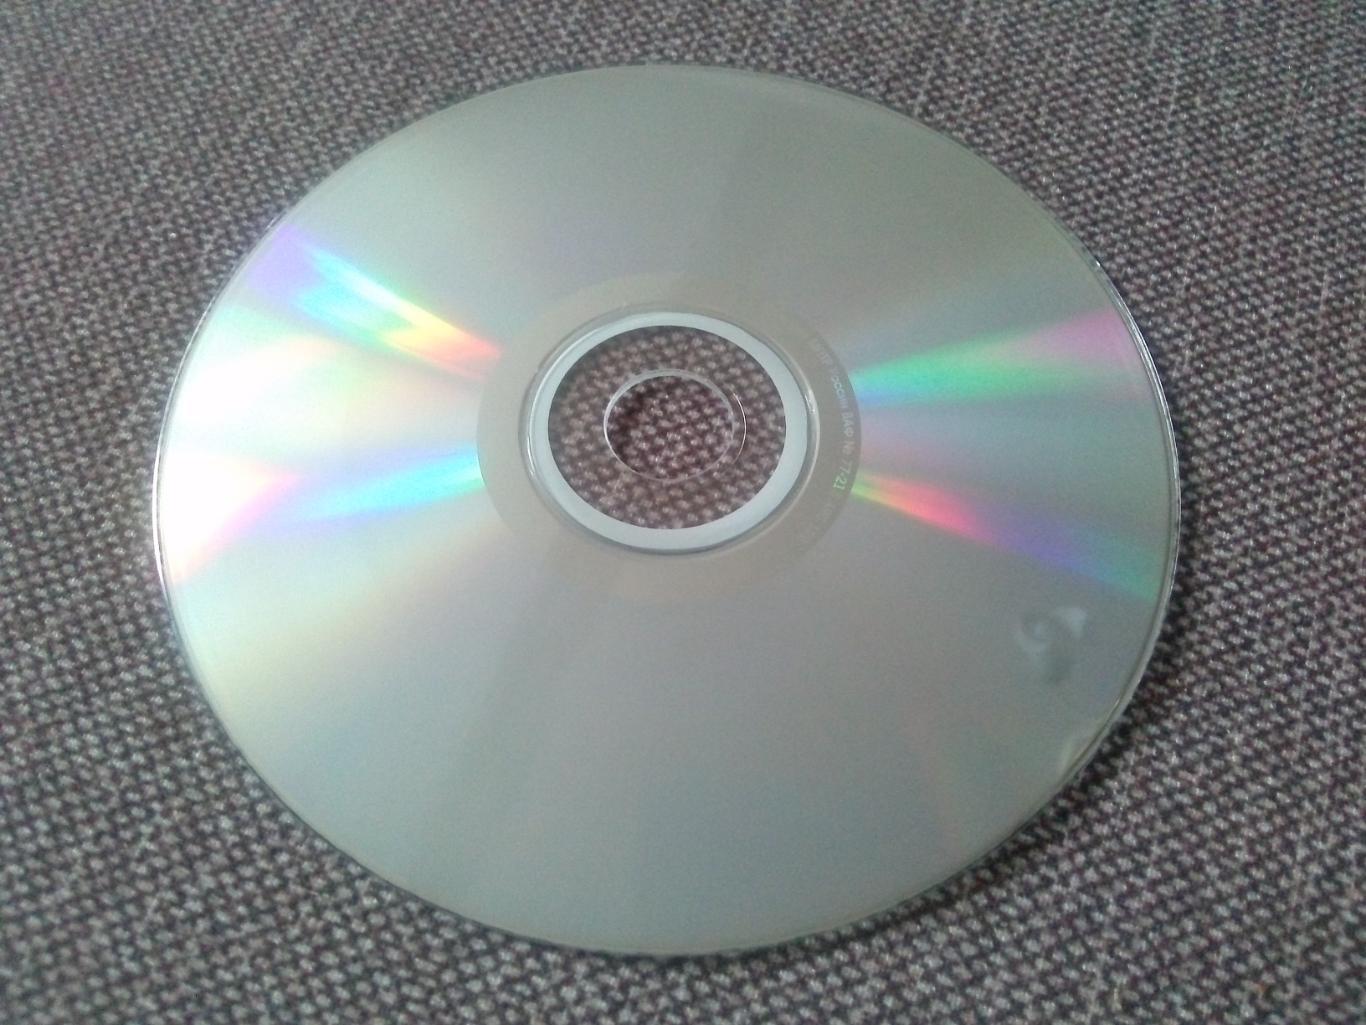 MP - 3 CD диск : Elton John (Элтон Джон) 1970 - 2006 гг. (14 альбомов) Рок 5